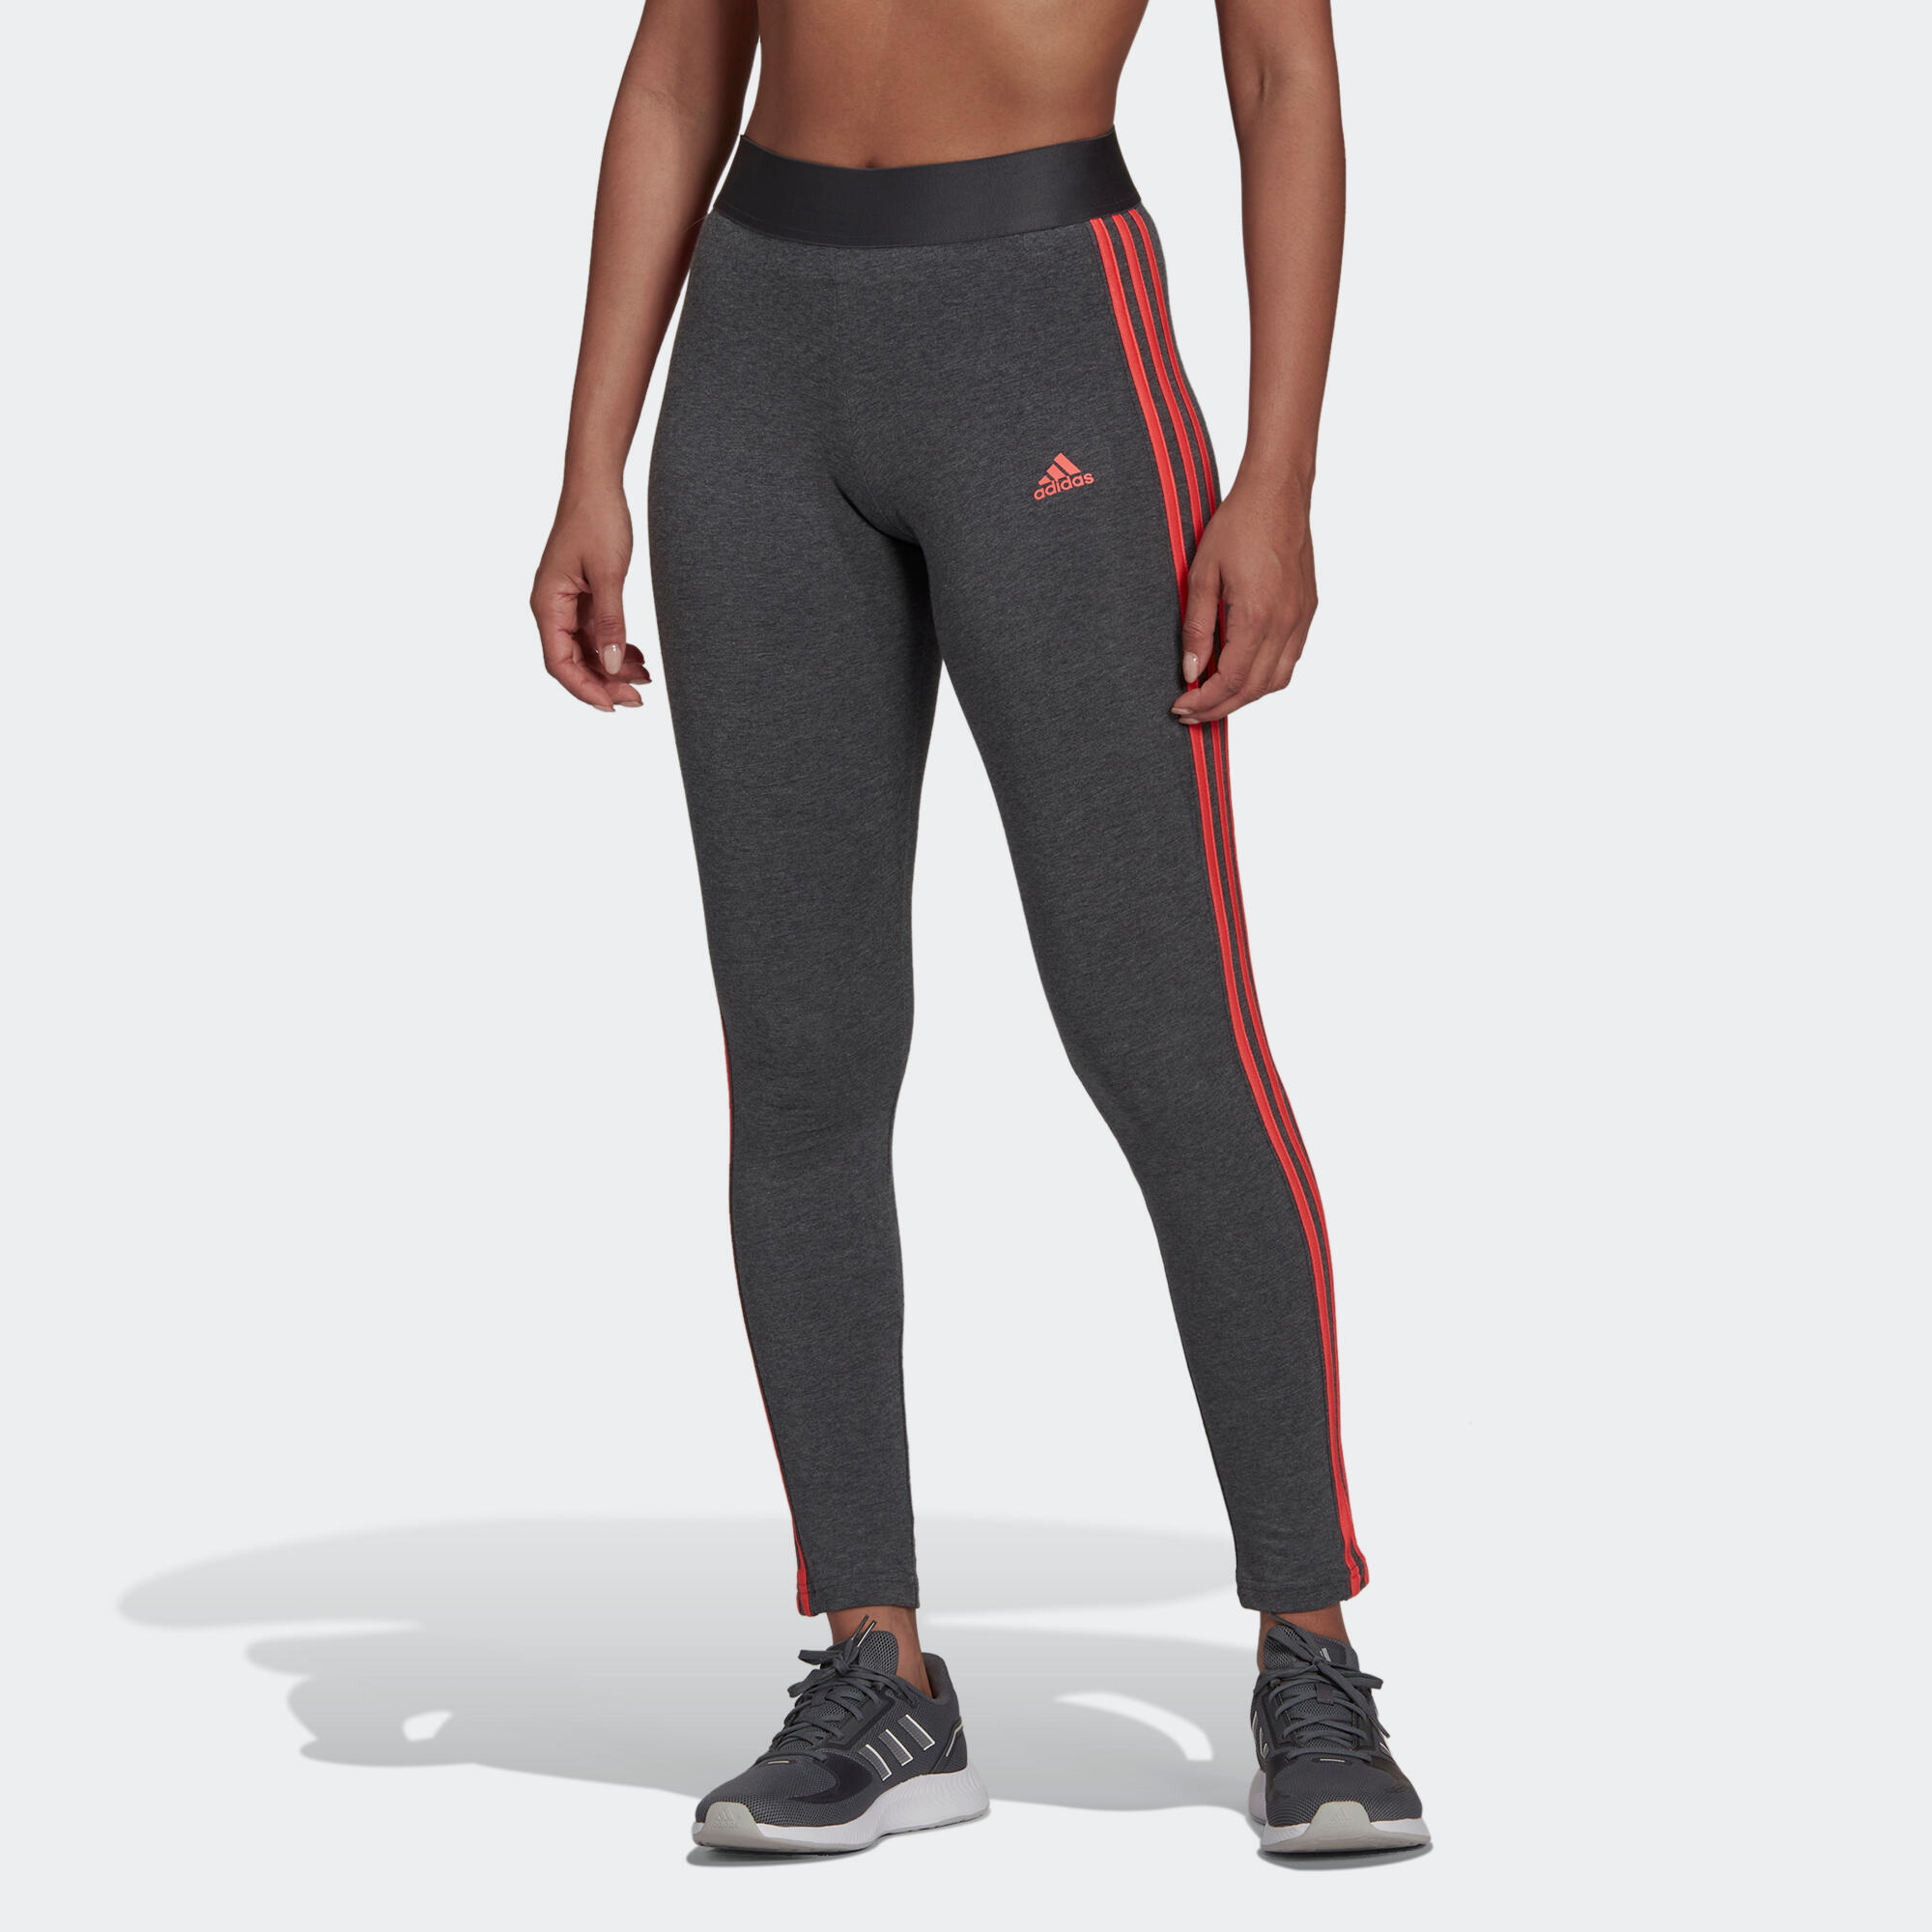 Colanți Fitness Adidas Essentials Damă decathlon.ro  Imbracaminte fitness femei